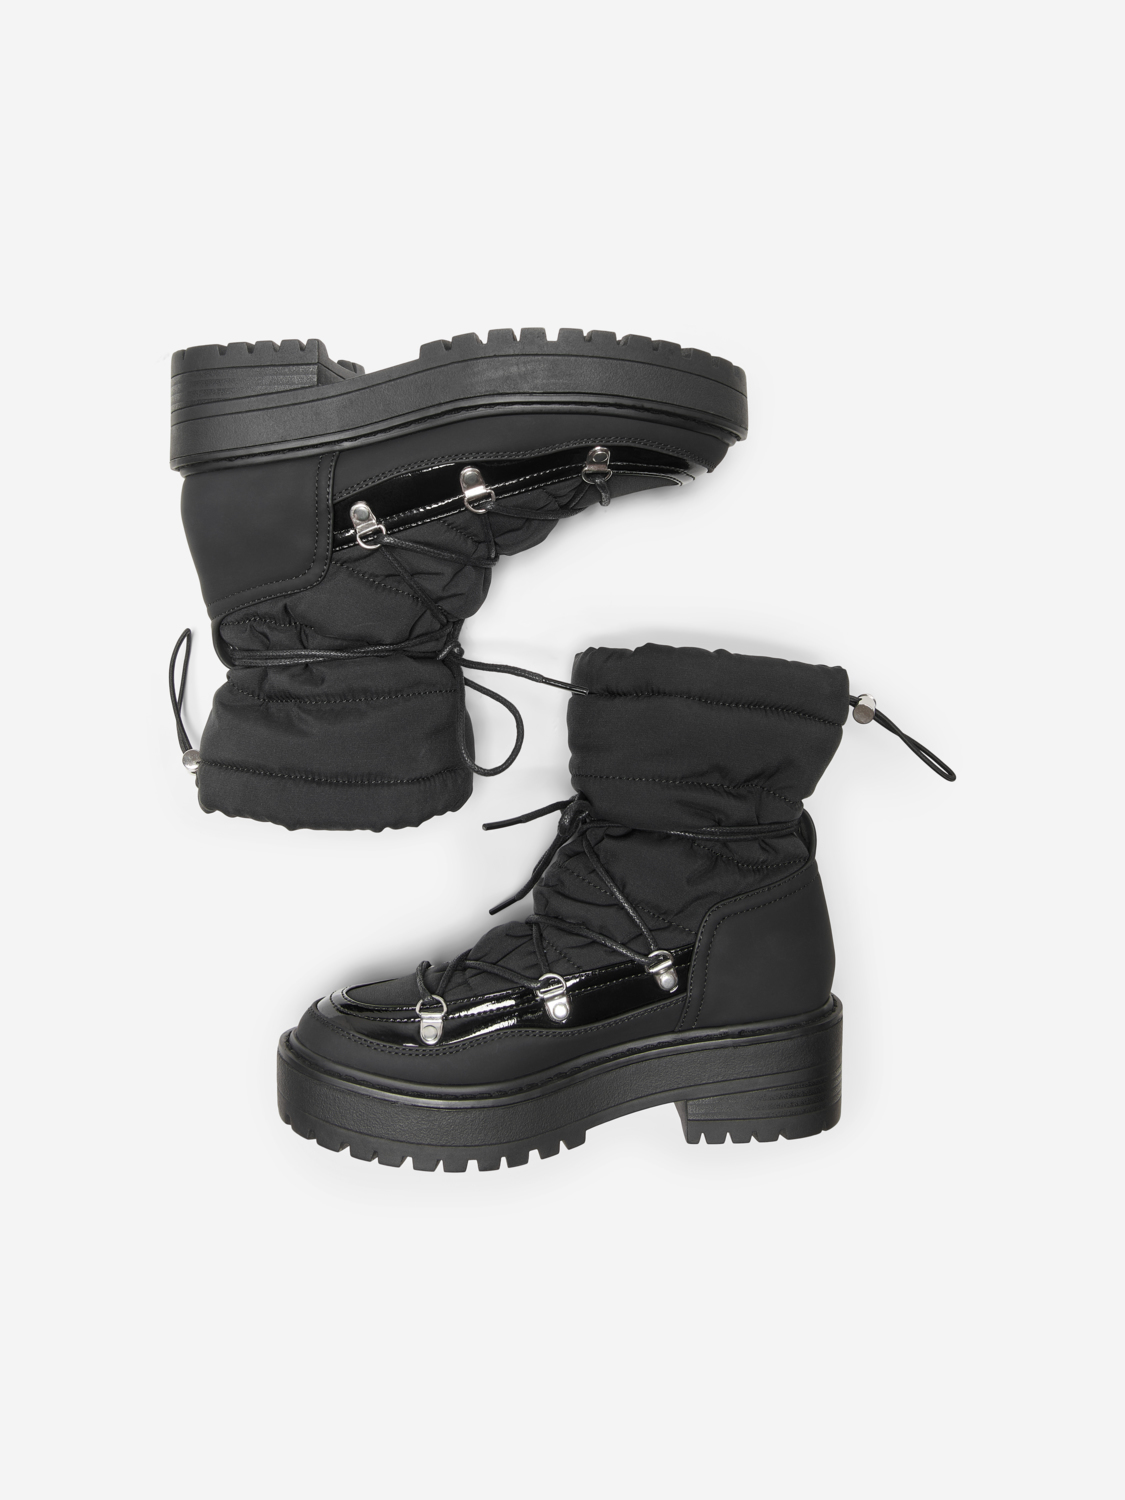 FINAL SALE - Brandie moon boots, BLACK, large